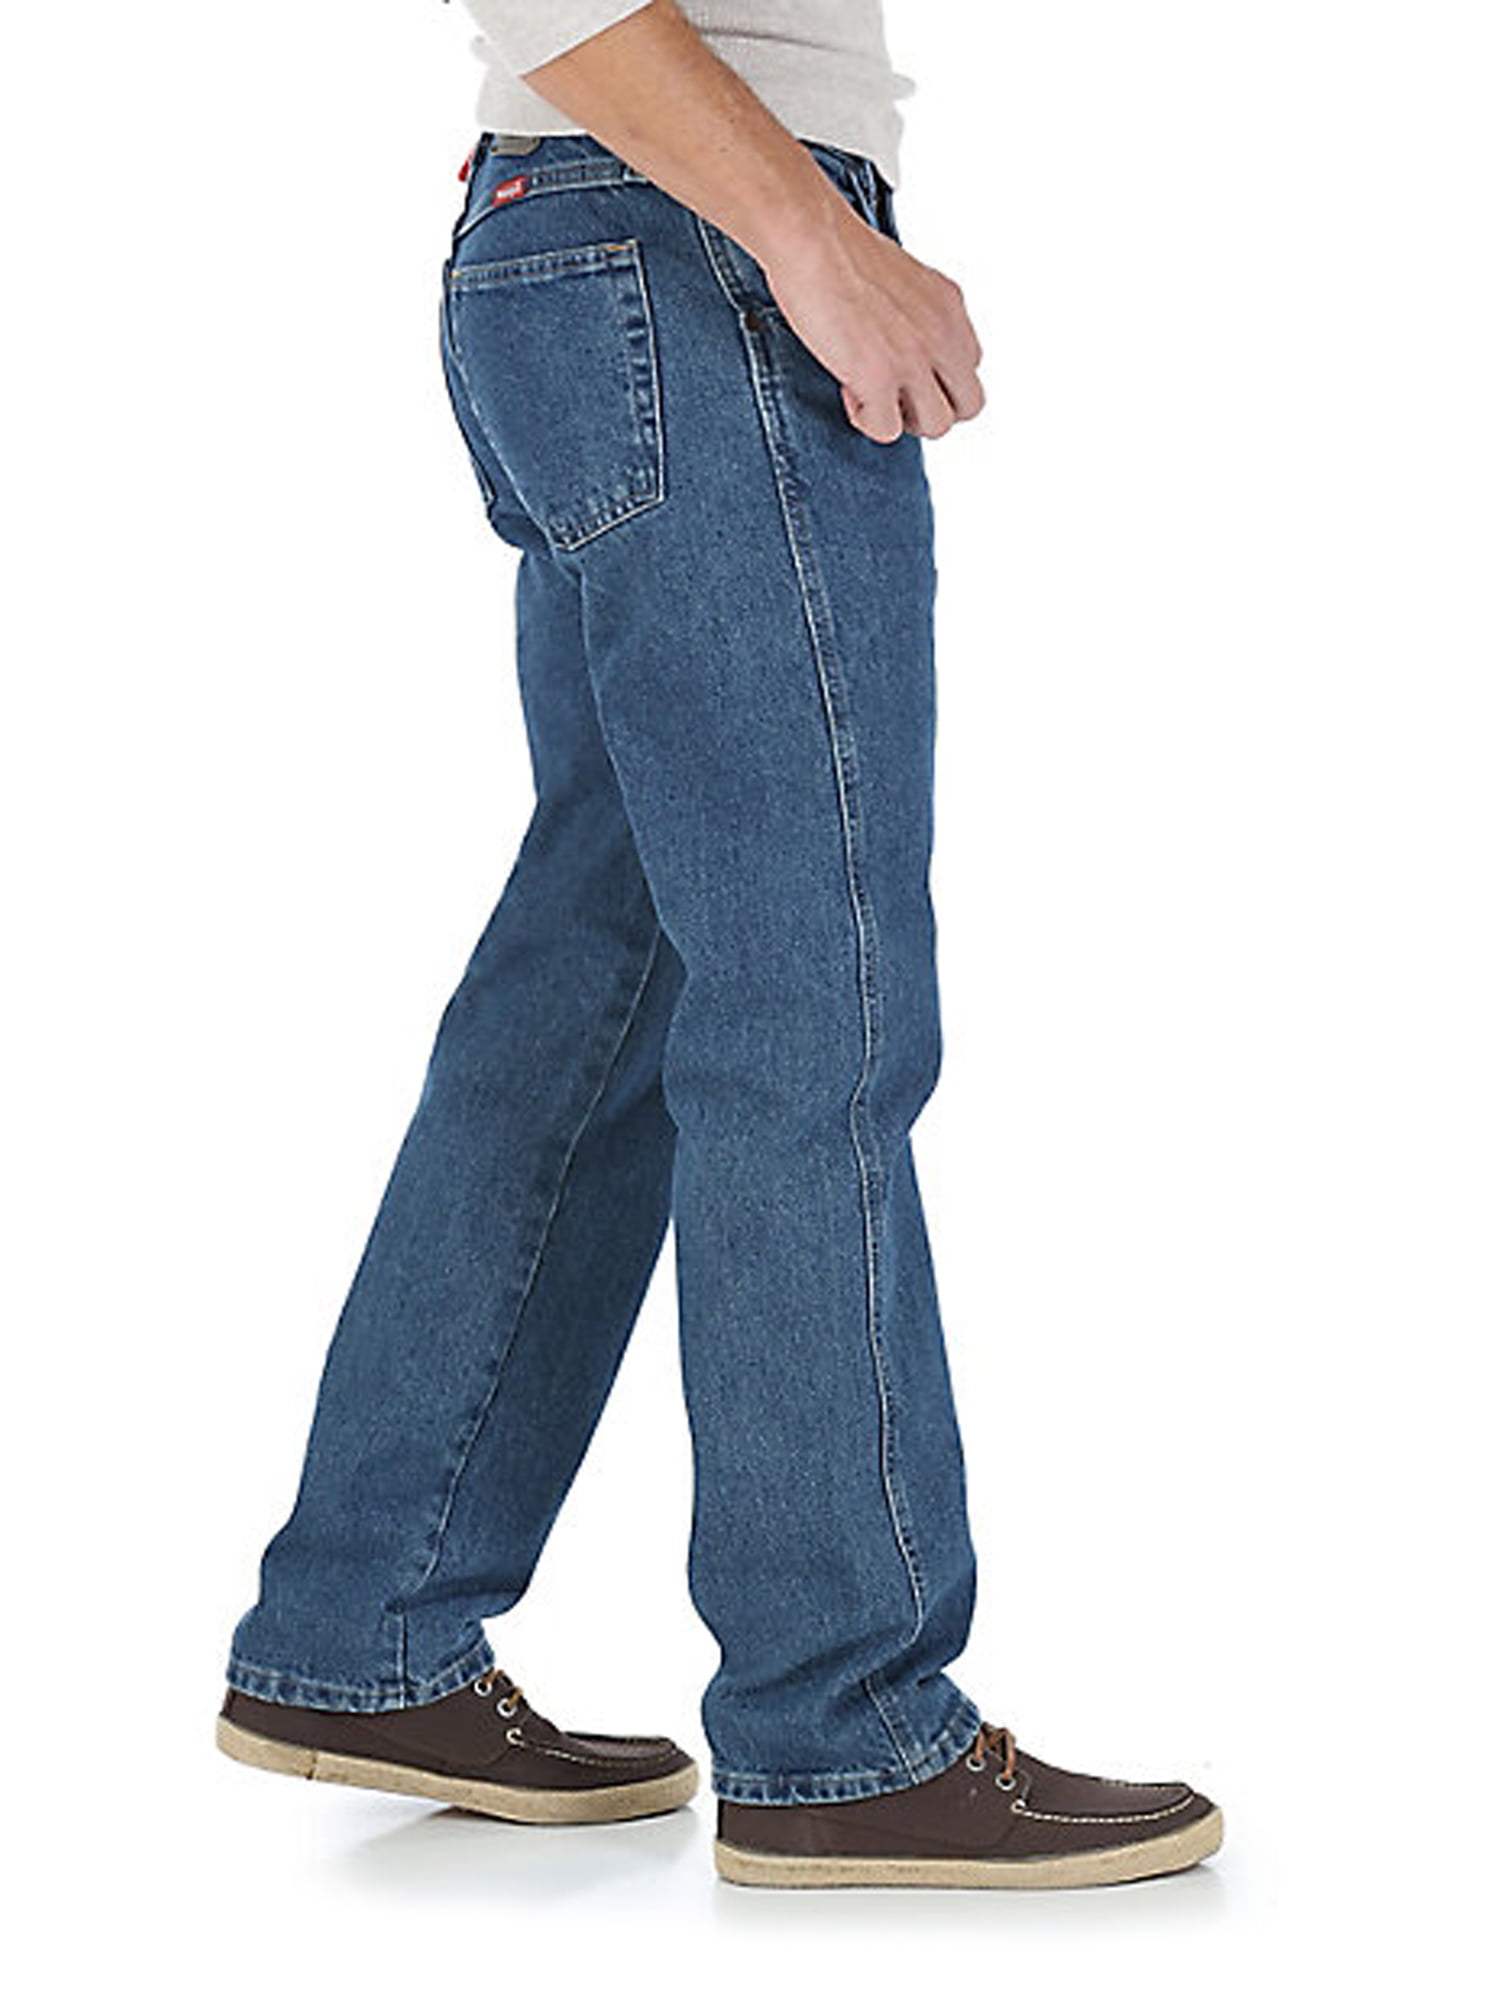 wrangler jeans 42x29